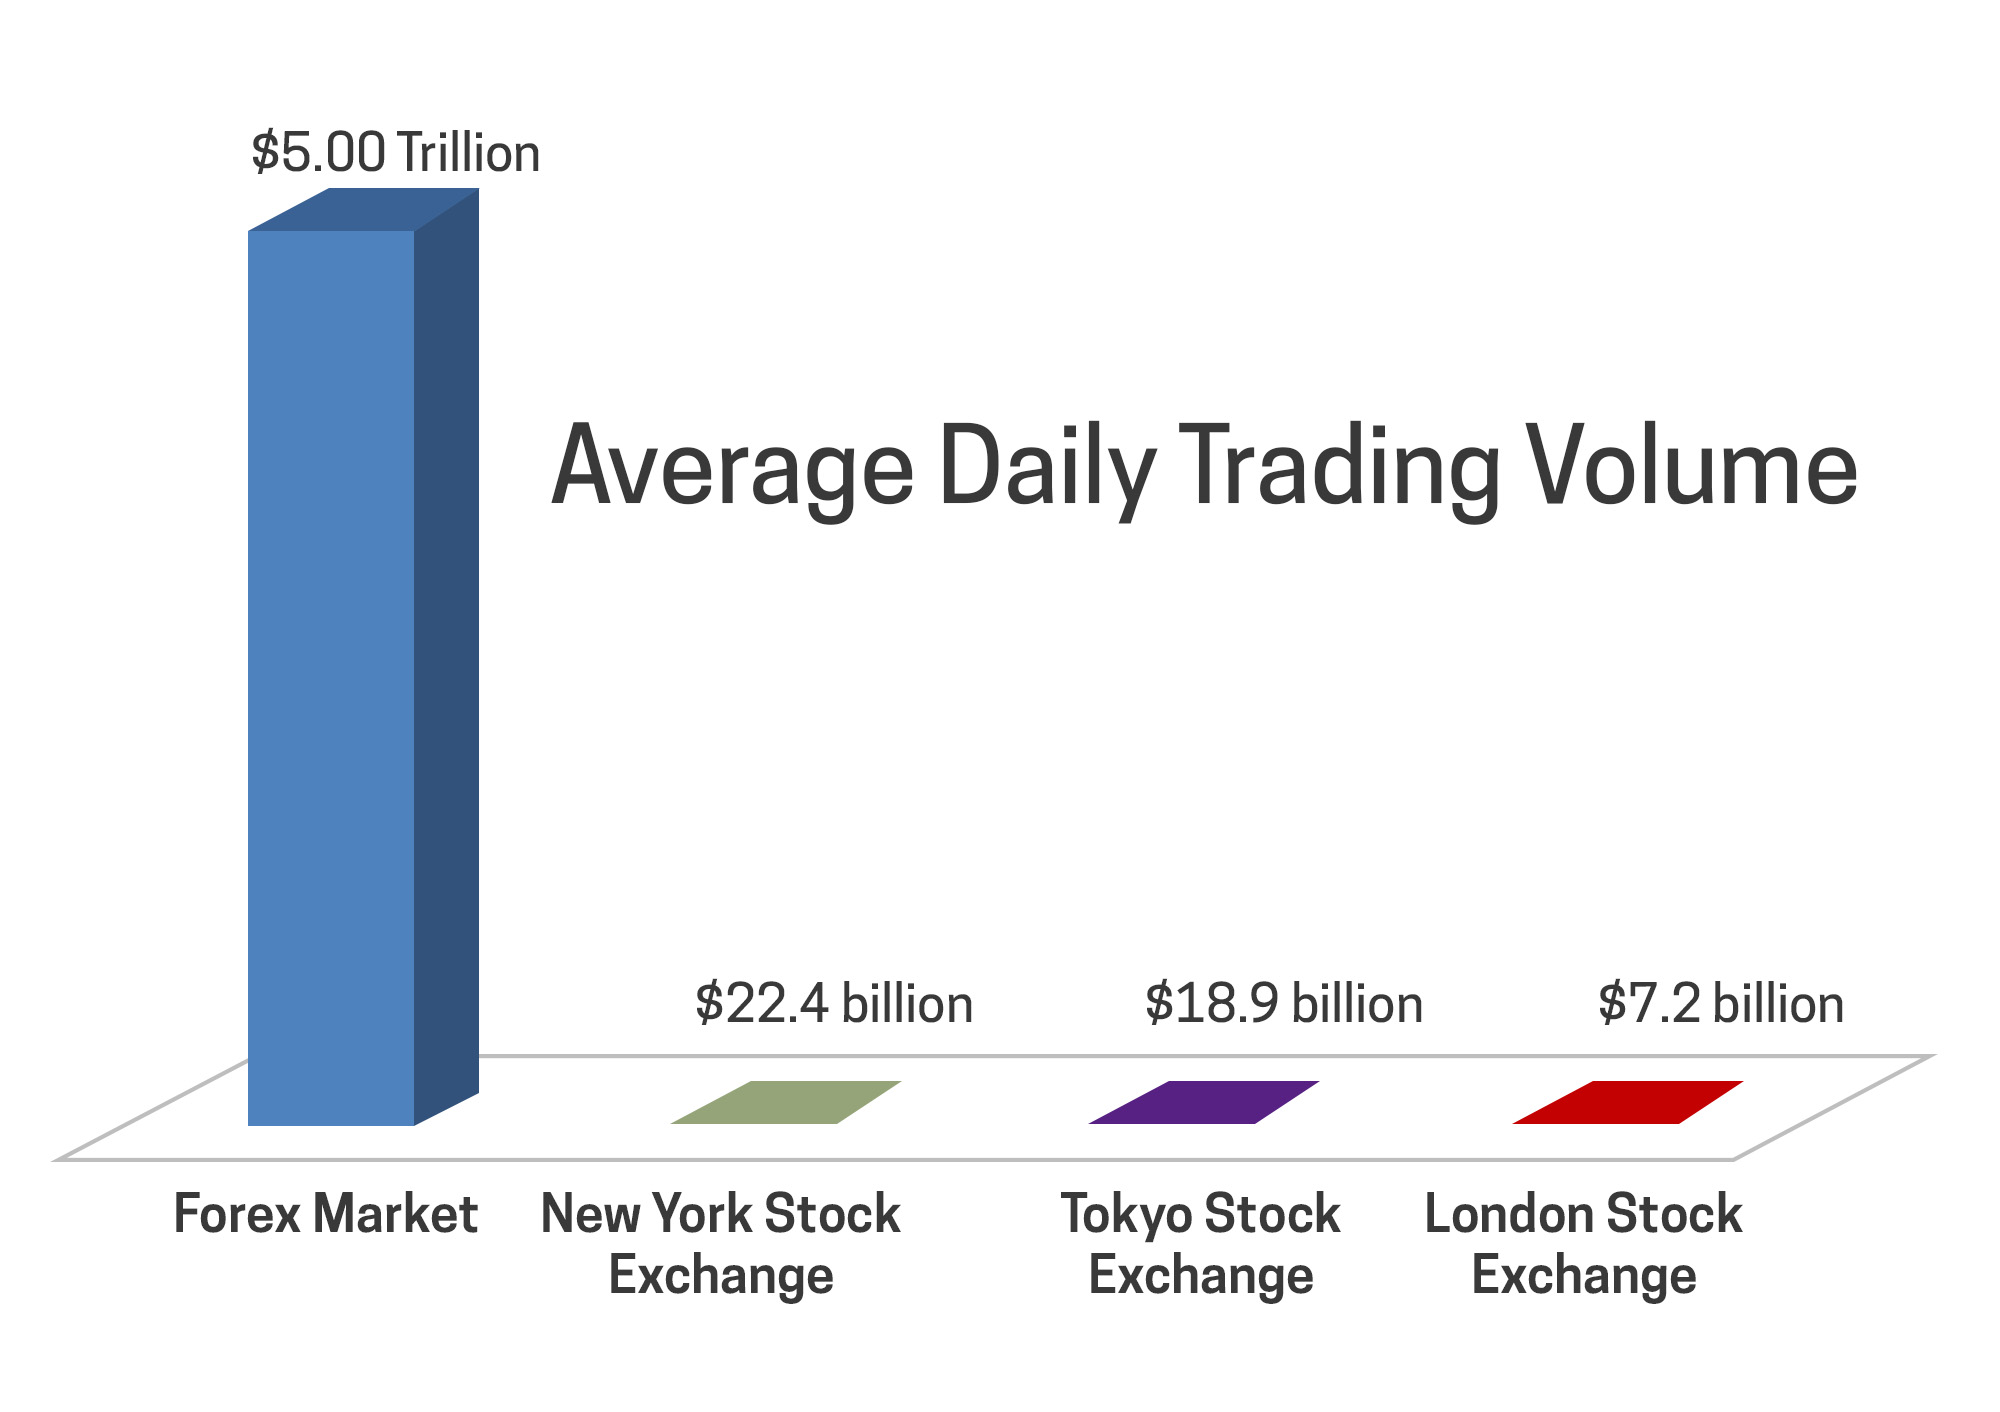 Forex Market Trading Volumes